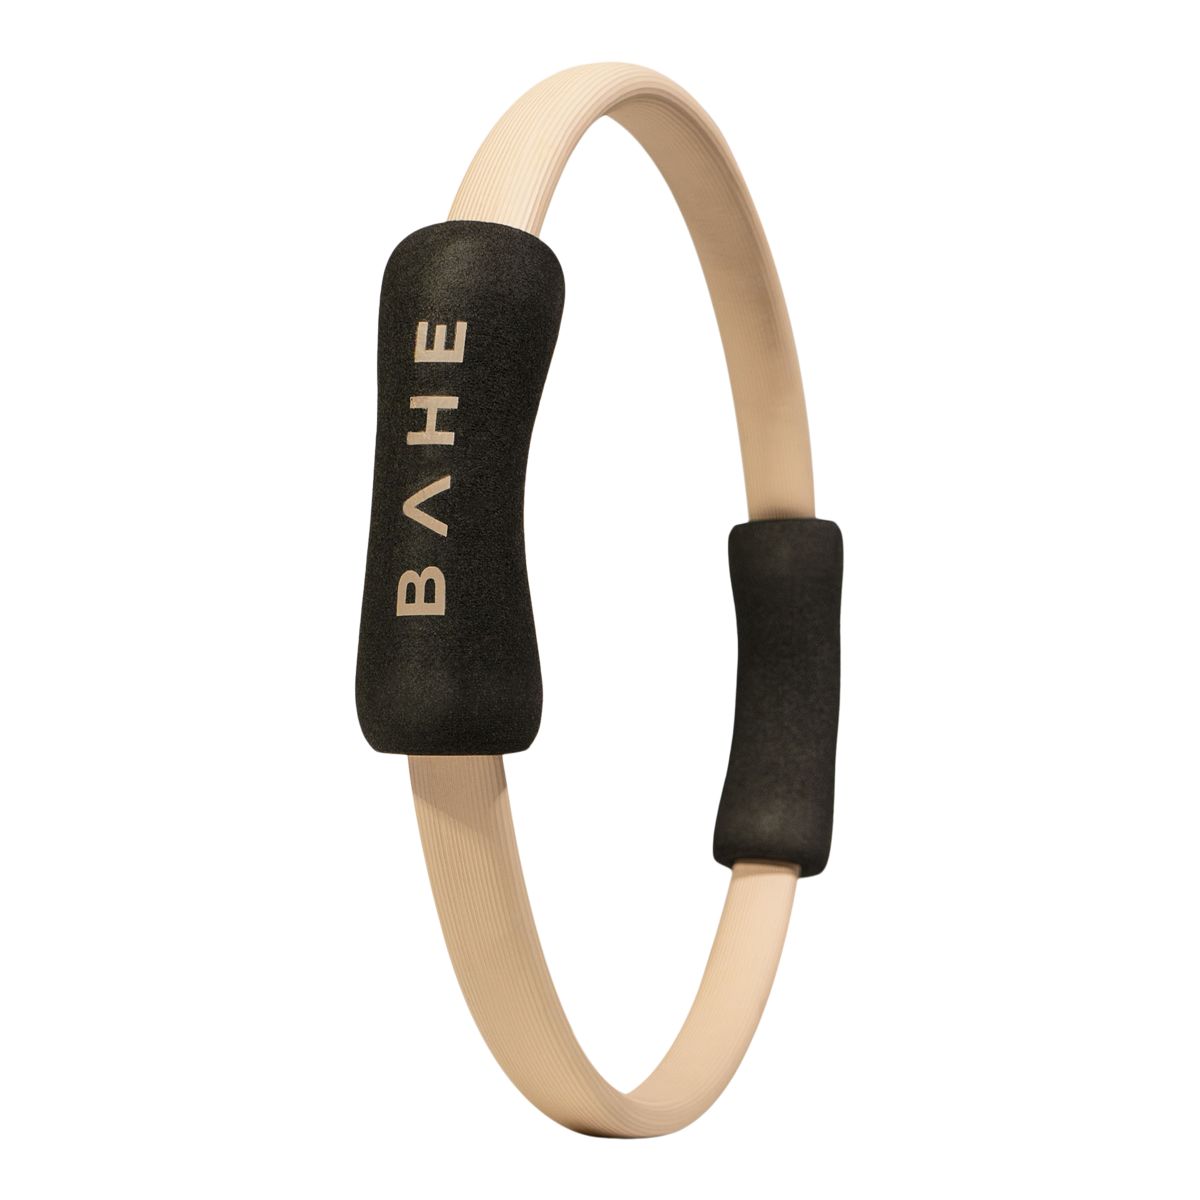 Bahe Pilates ring